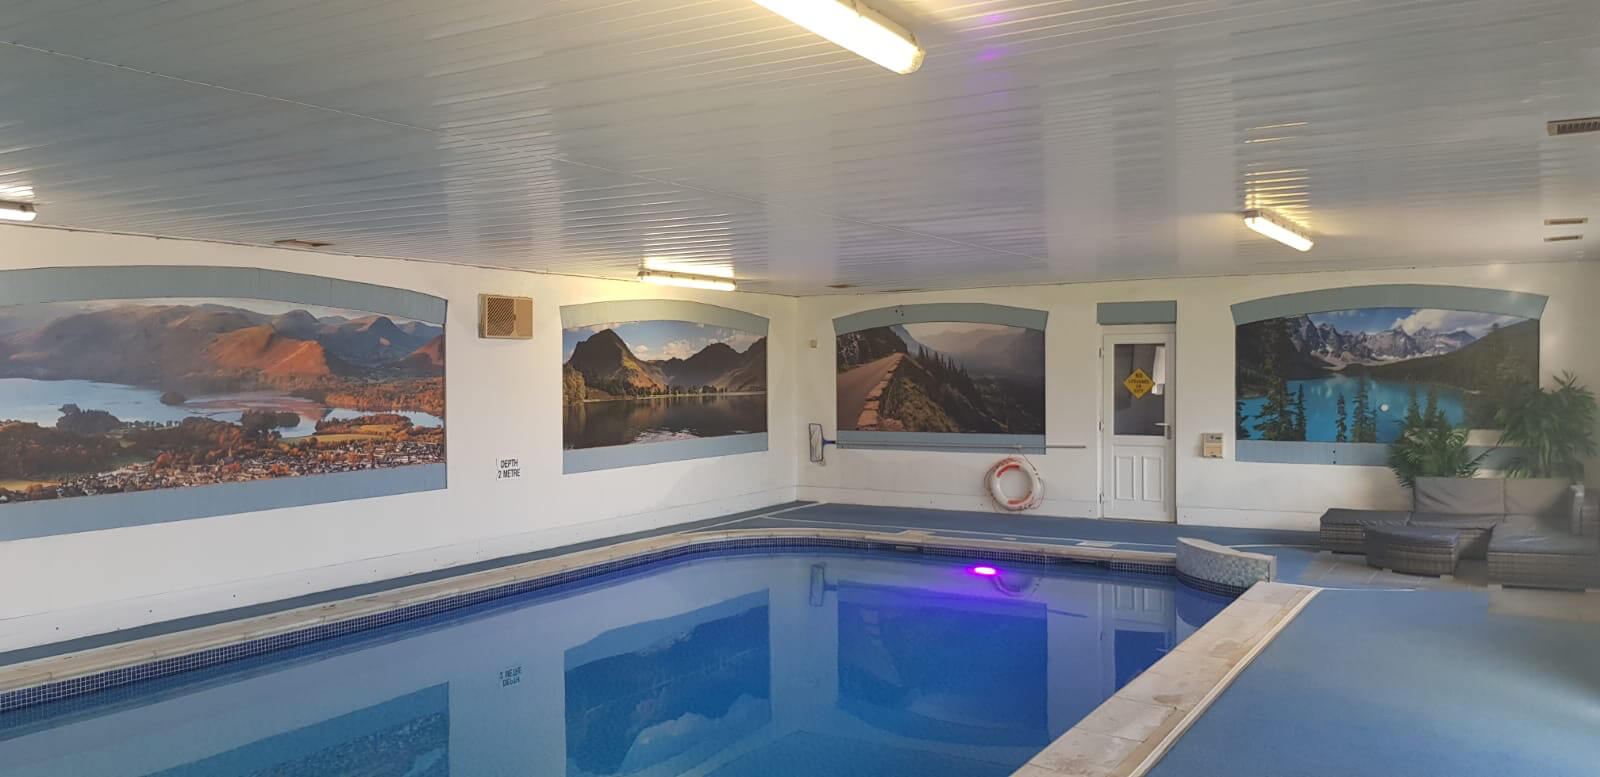 Dalston Leisure Pool - Private swimming pool Carlisle